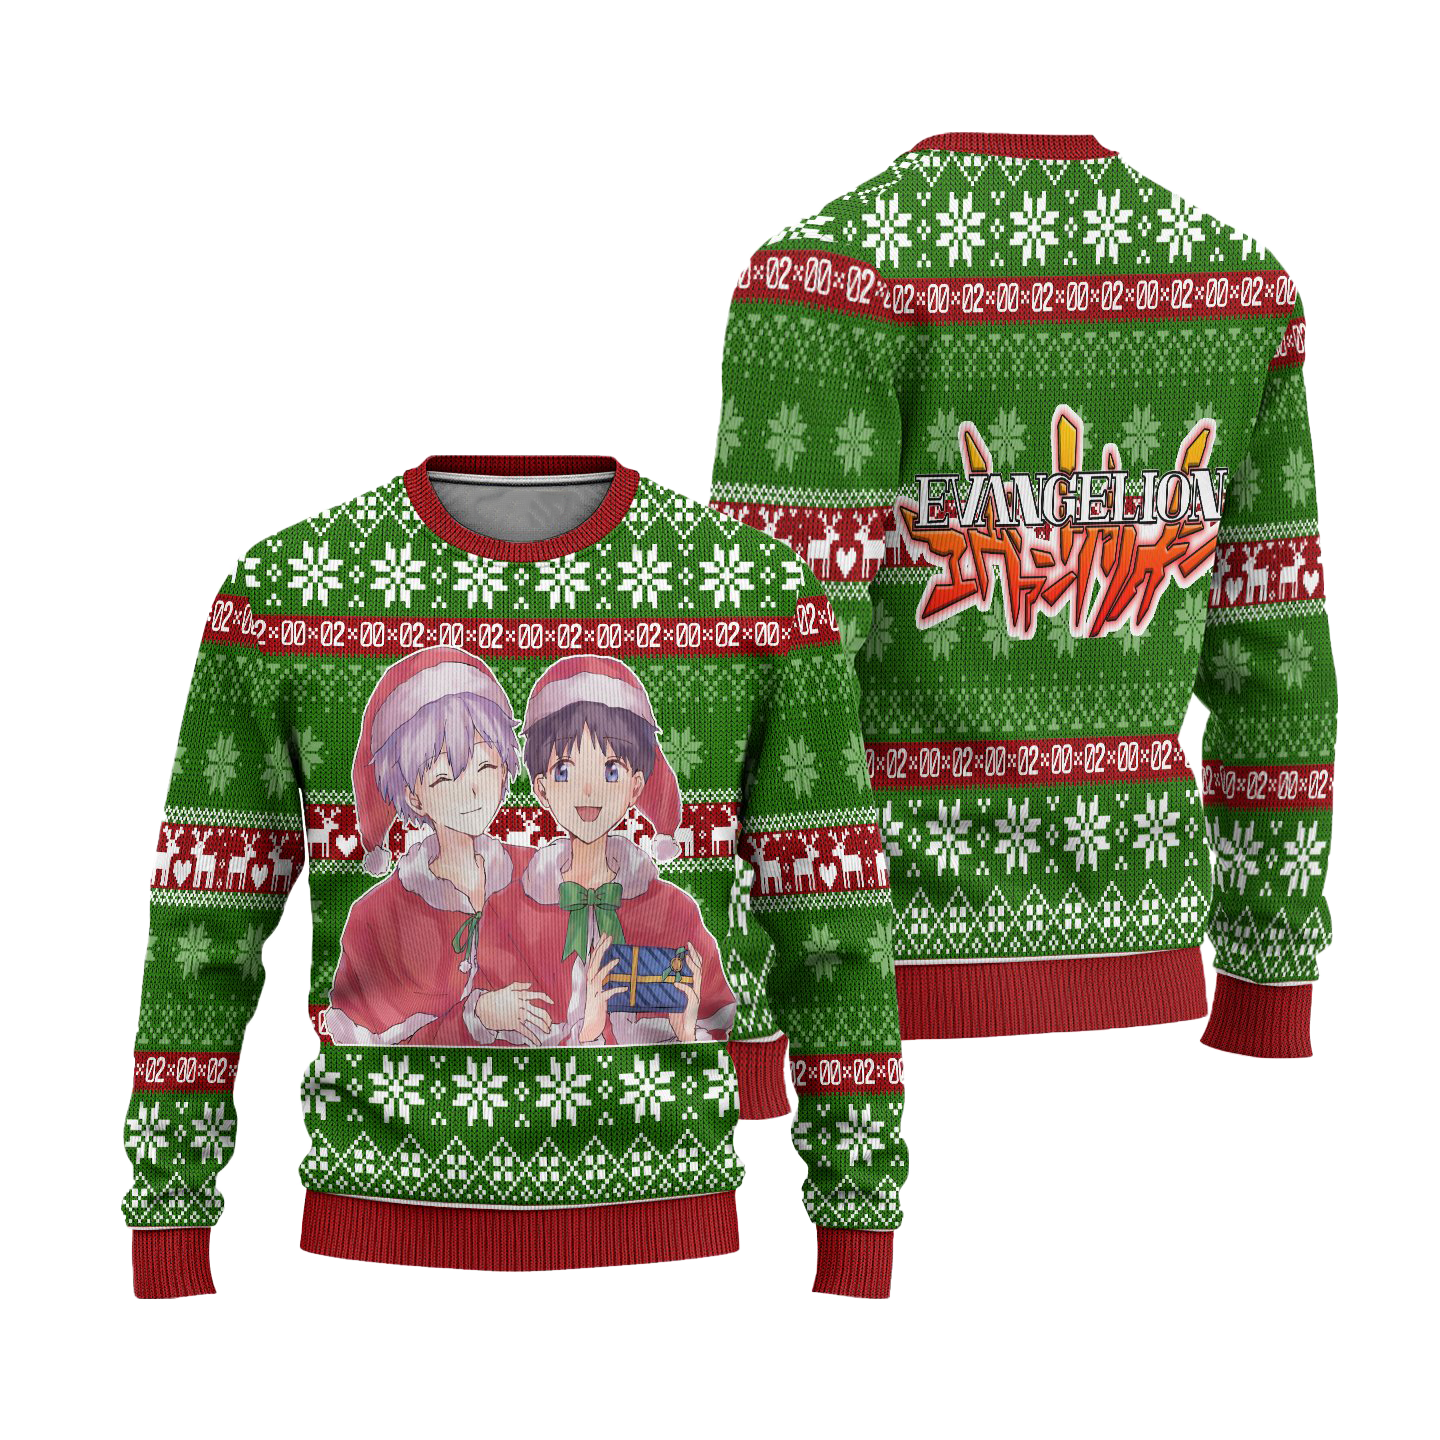 Kaworu x Shinji Anime Ugly Christmas Sweater Custom Neon Genesis Evangelion Xmas Gift